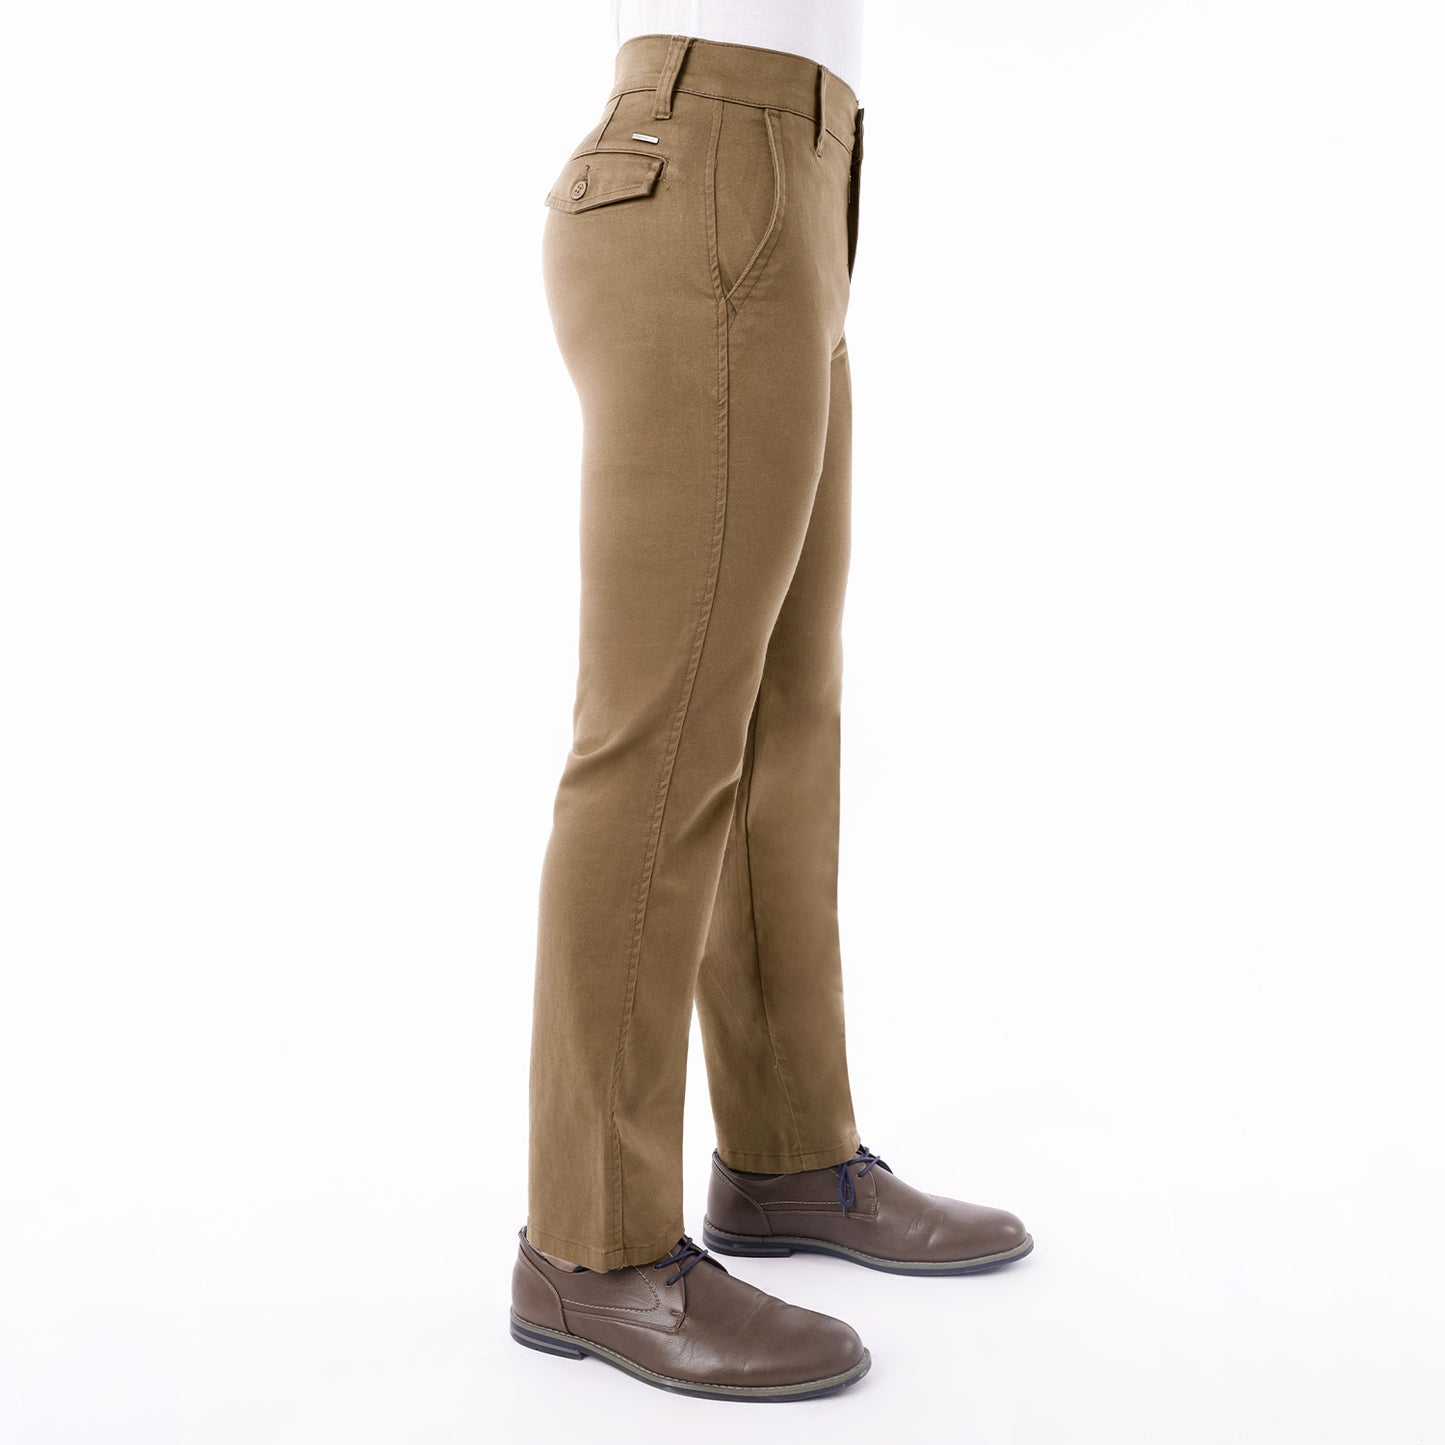 Pantalon Drill Hombre Satinado Regular Fit Camello - 230612